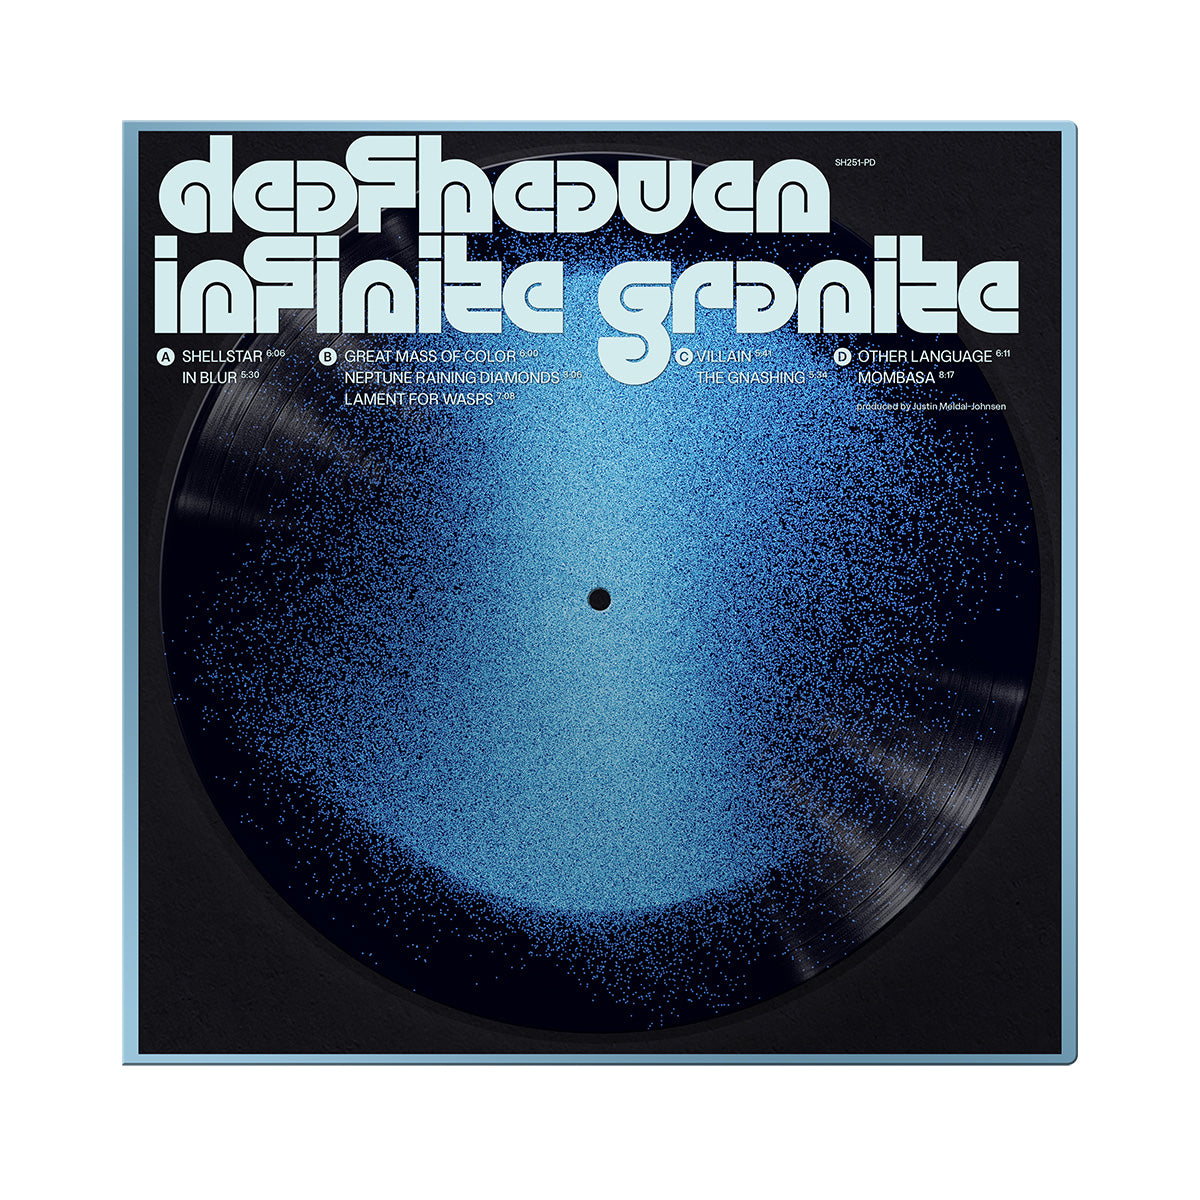 DEAFHEAVEN "Infinite Granite" 2xLP - Deluxe Picture Disc